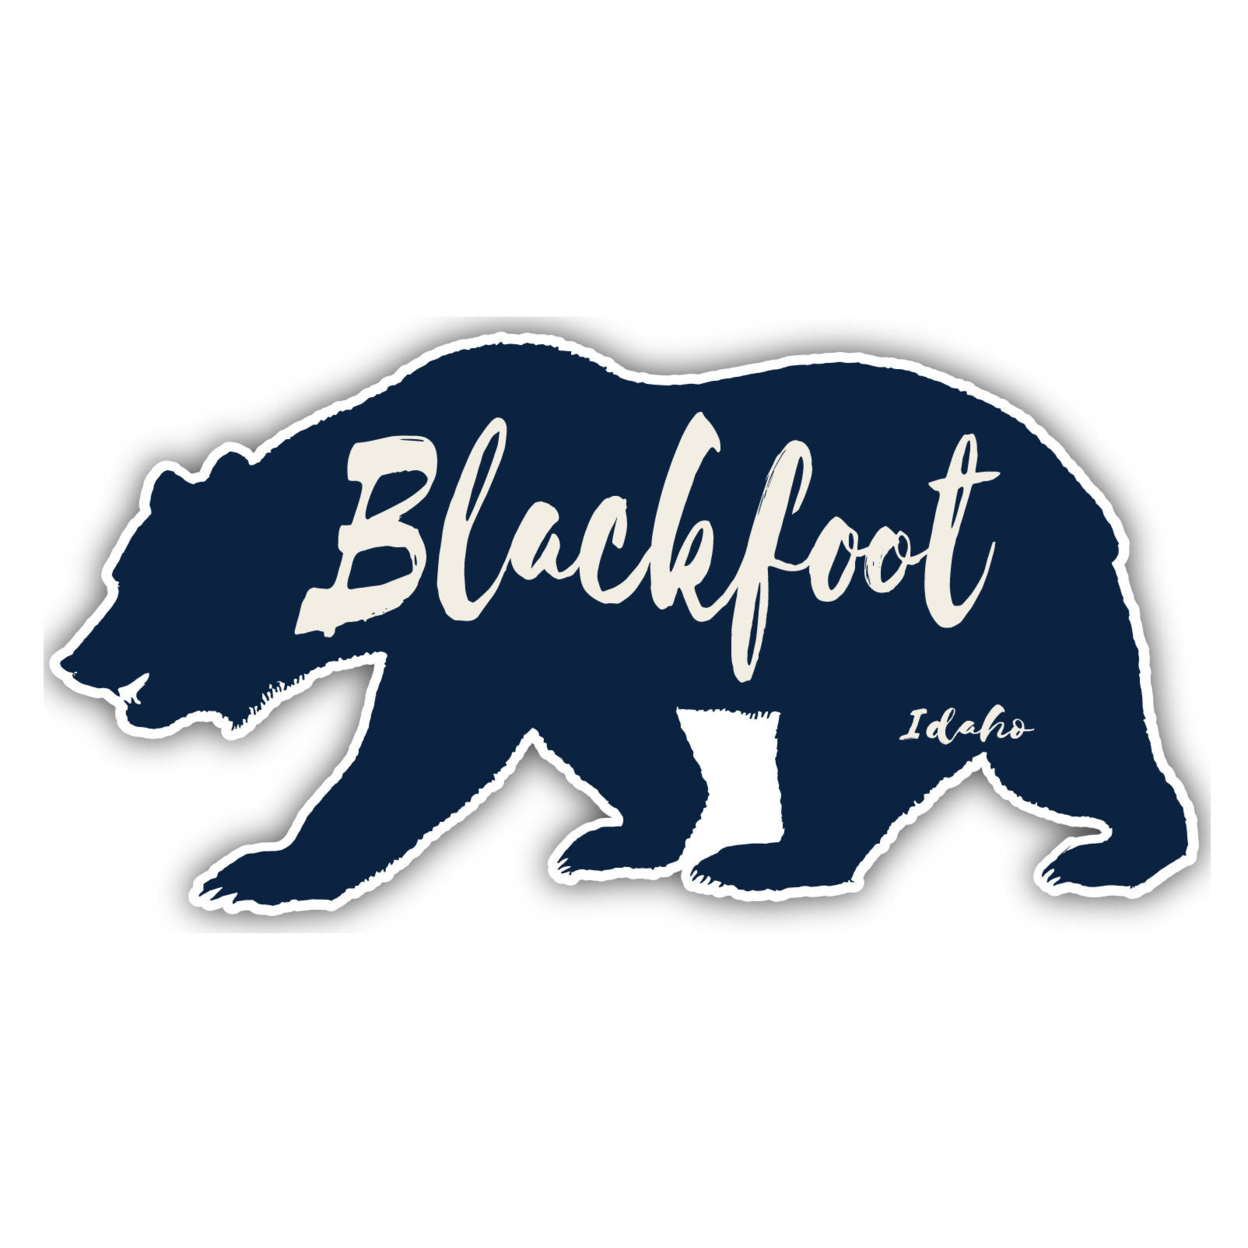 Blackfoot Idaho Souvenir Decorative Stickers (Choose Theme And Size) - Single Unit, 10-Inch, Camp Life